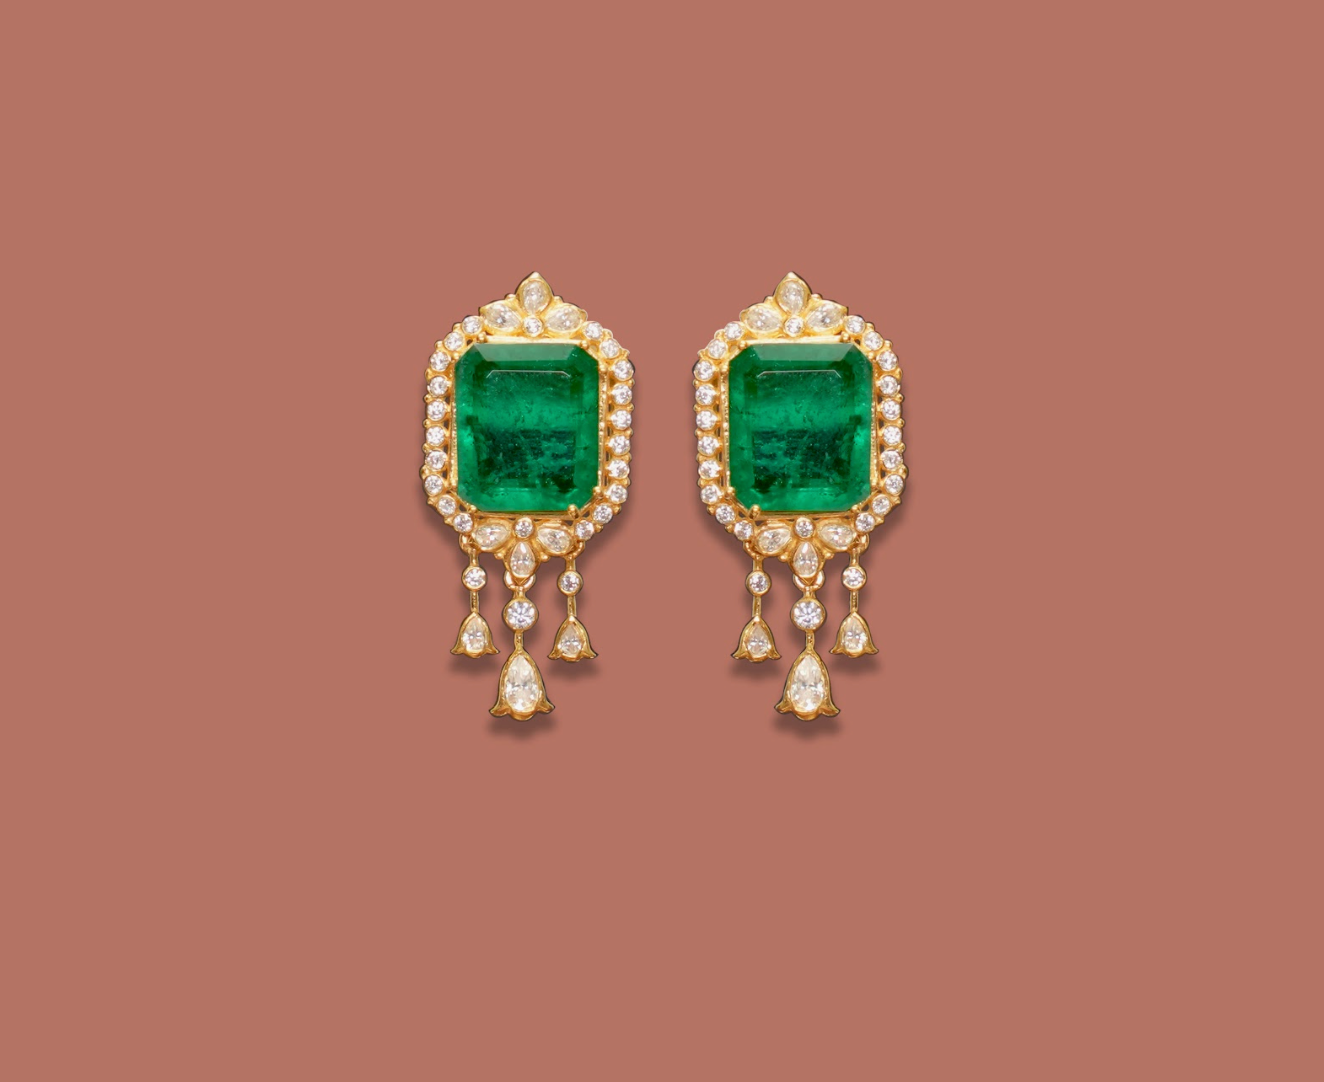 925 Silver Iris Emerald Necklace Set - Amrrutam